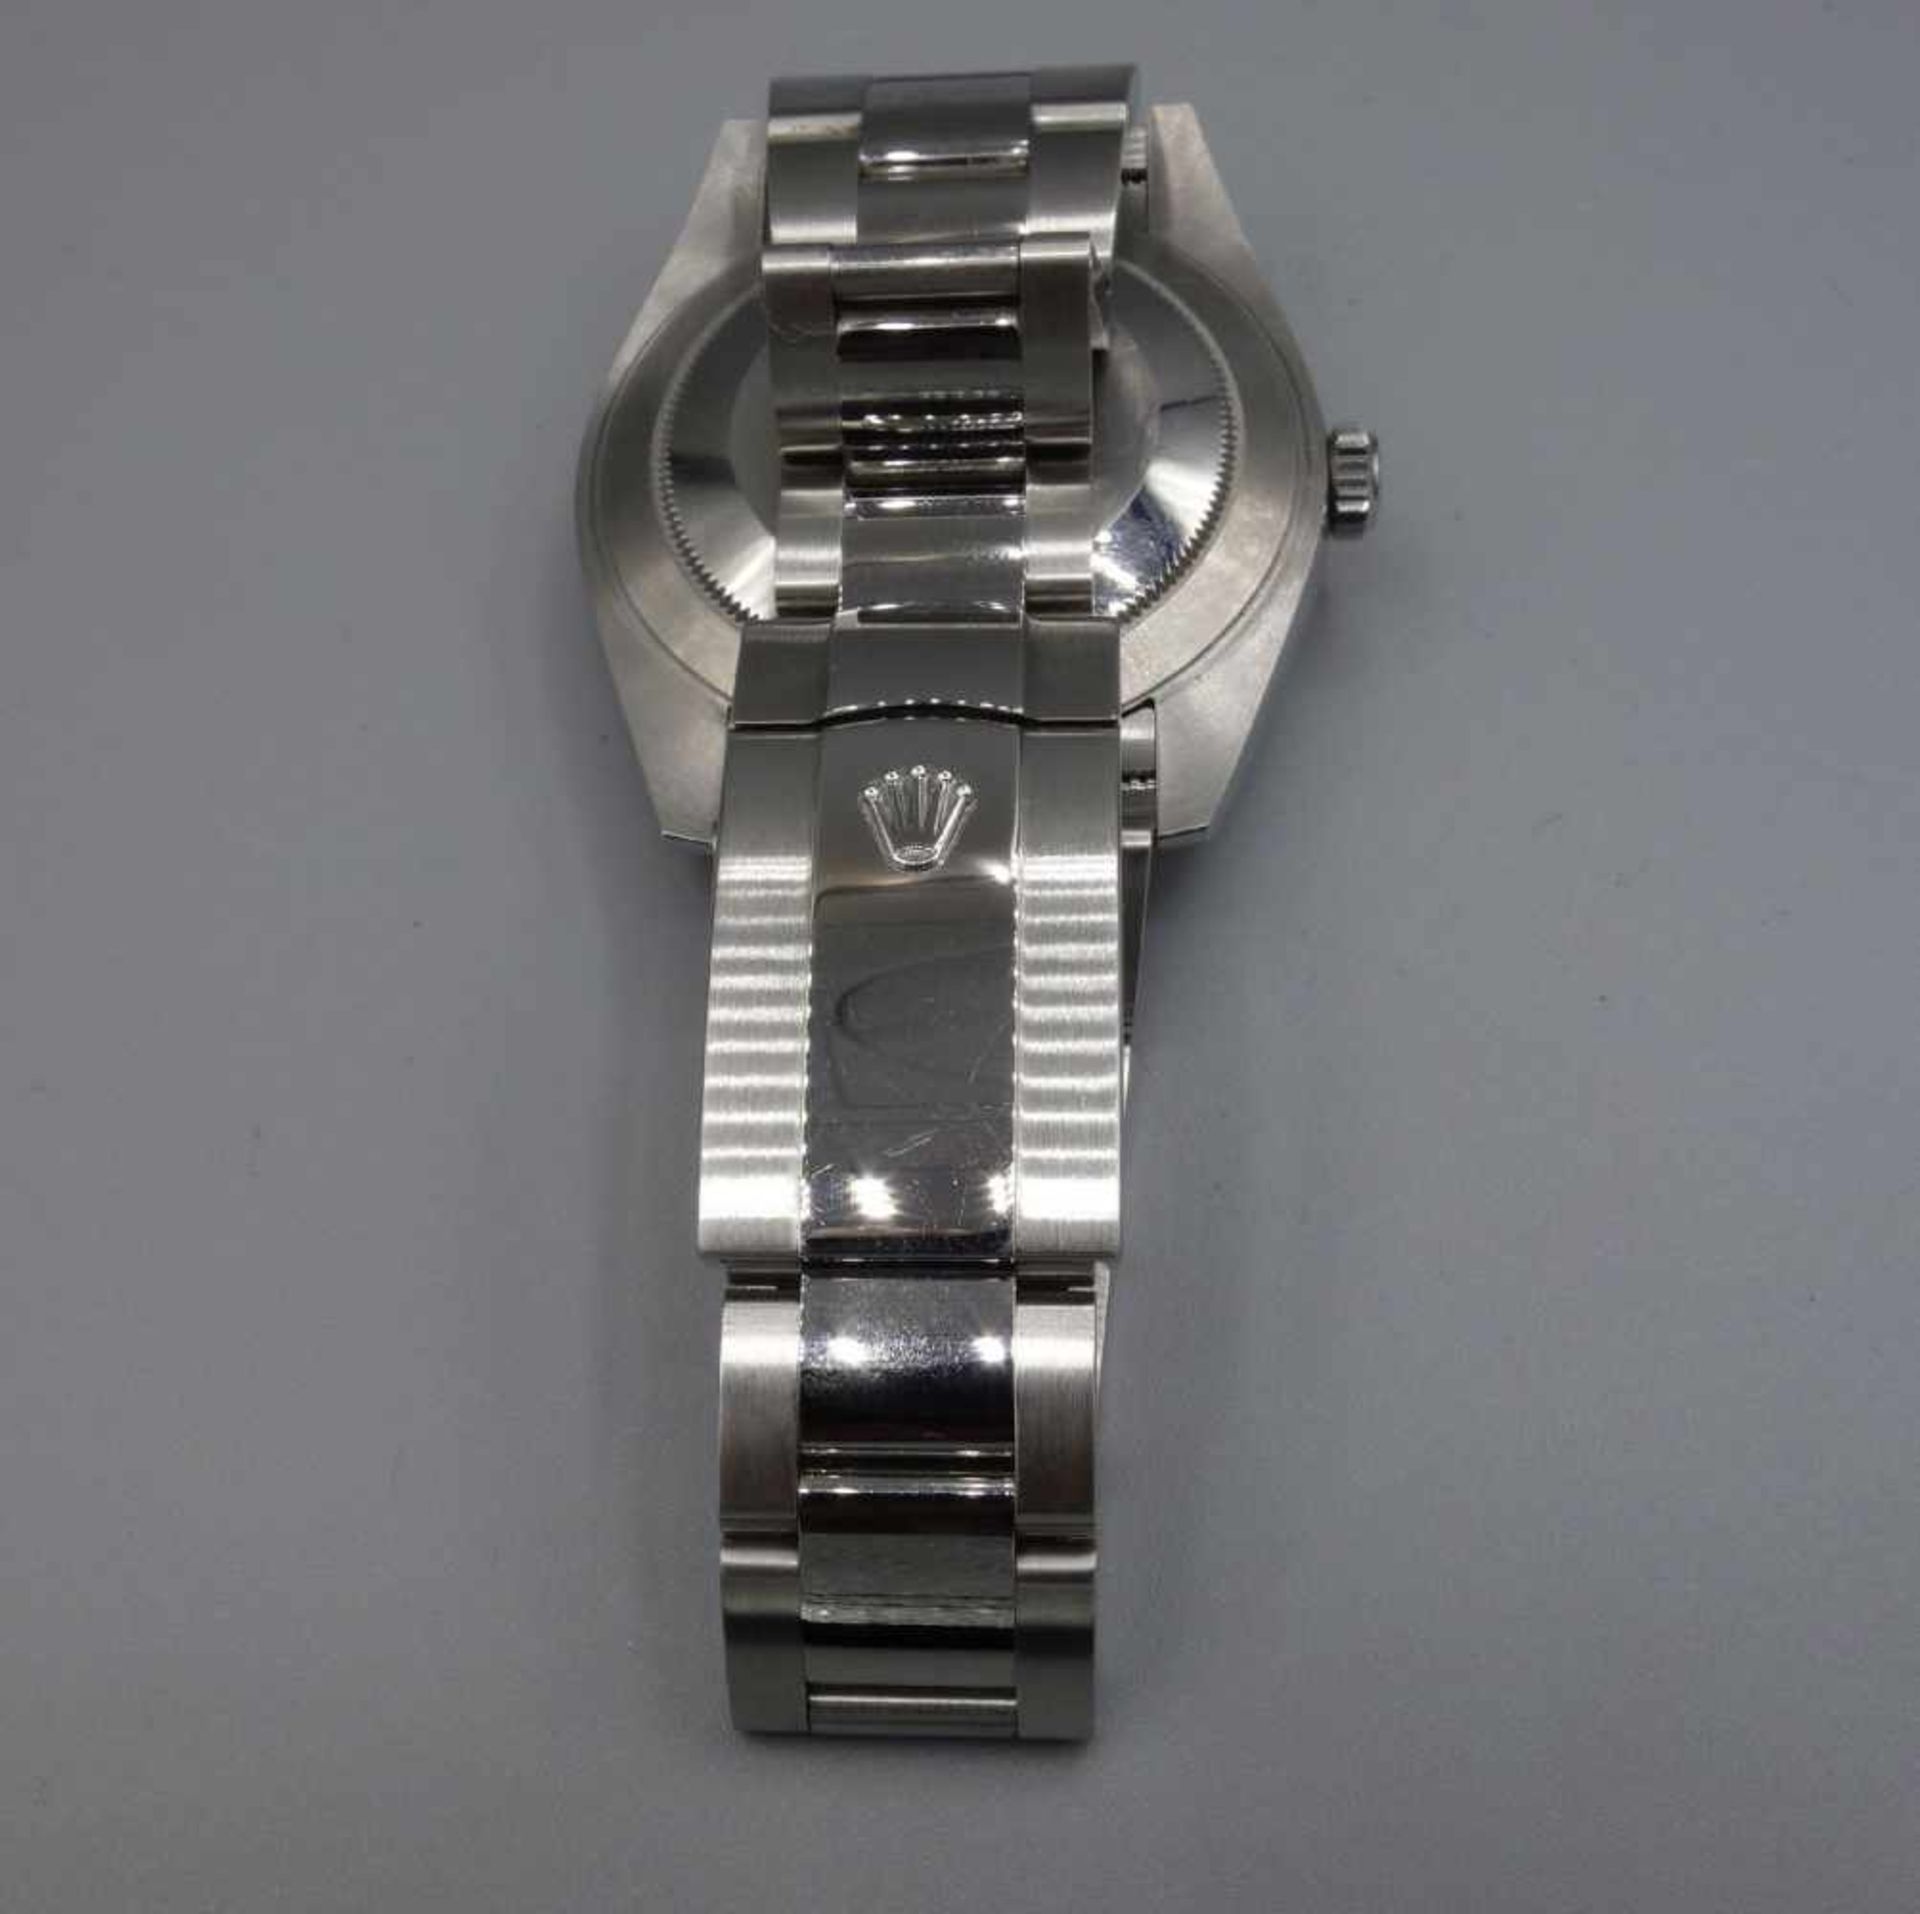 ARMBANDUHR - ROLEX OYSTER PERPETUAL DATEJUST / wristwatch, Rolex Watch Company / Schweiz, erworben - Image 13 of 15